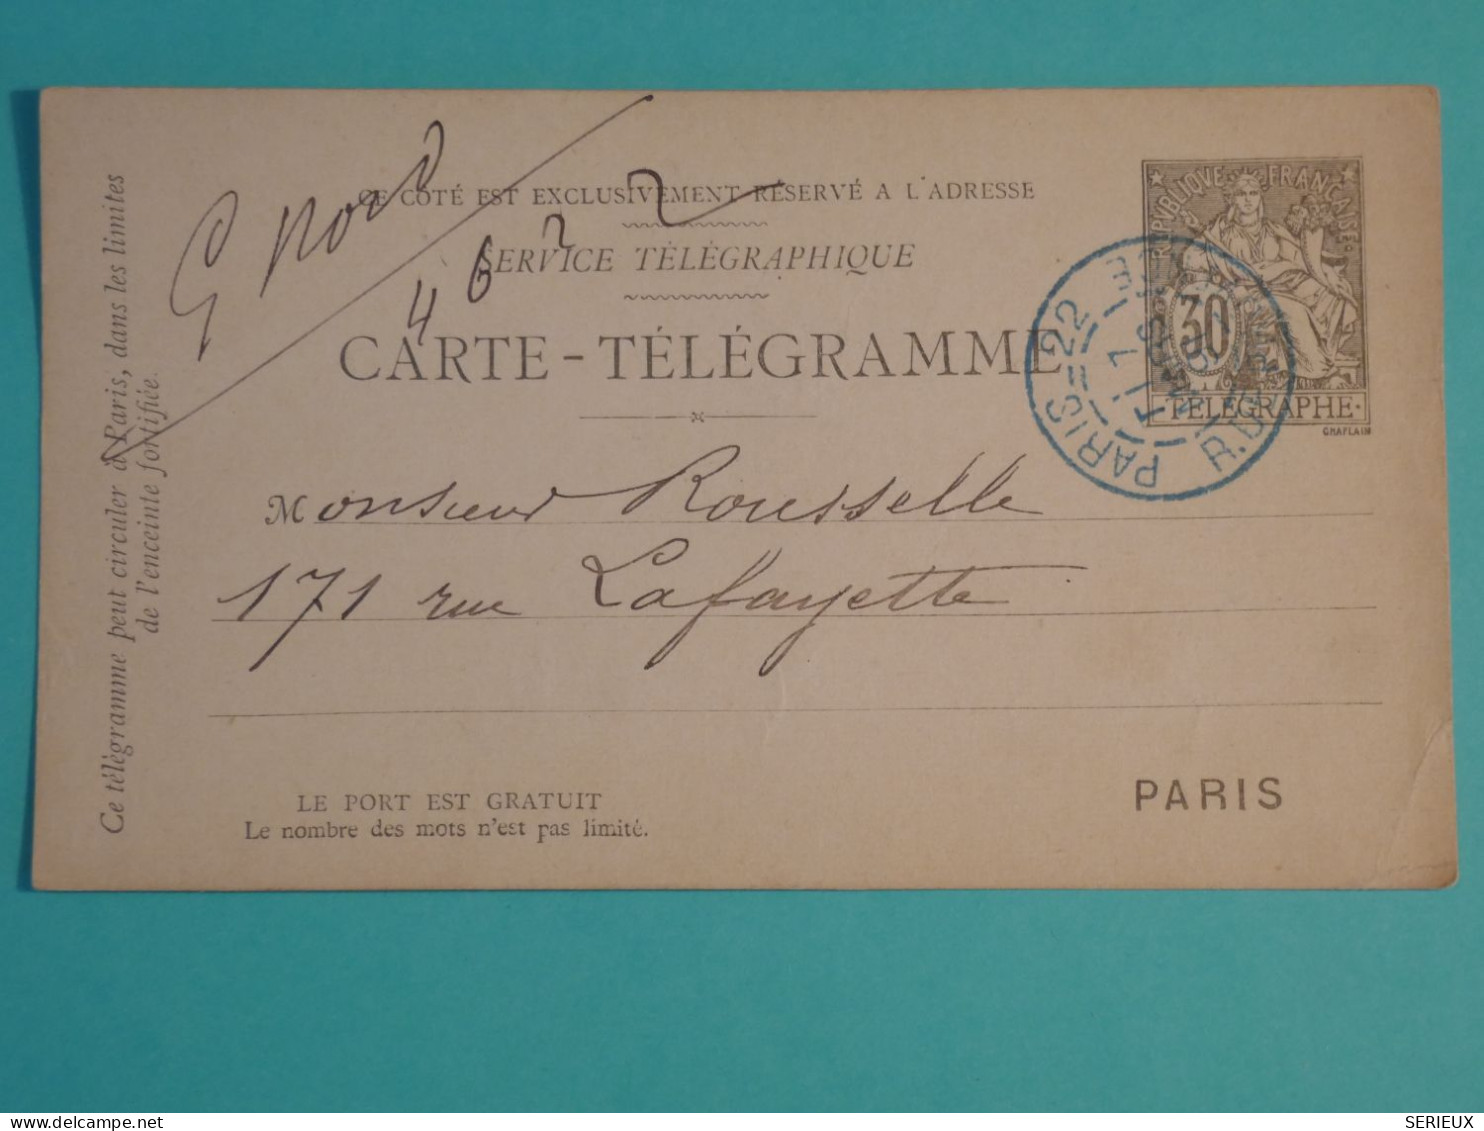 DH20 FRANCE  BELLE  CARTE TELEGRAMME  PARIS  PARIS  1891 ++TELEGRAPHE   ++AFF.  PLAISANT++++++ - Telegraph And Telephone